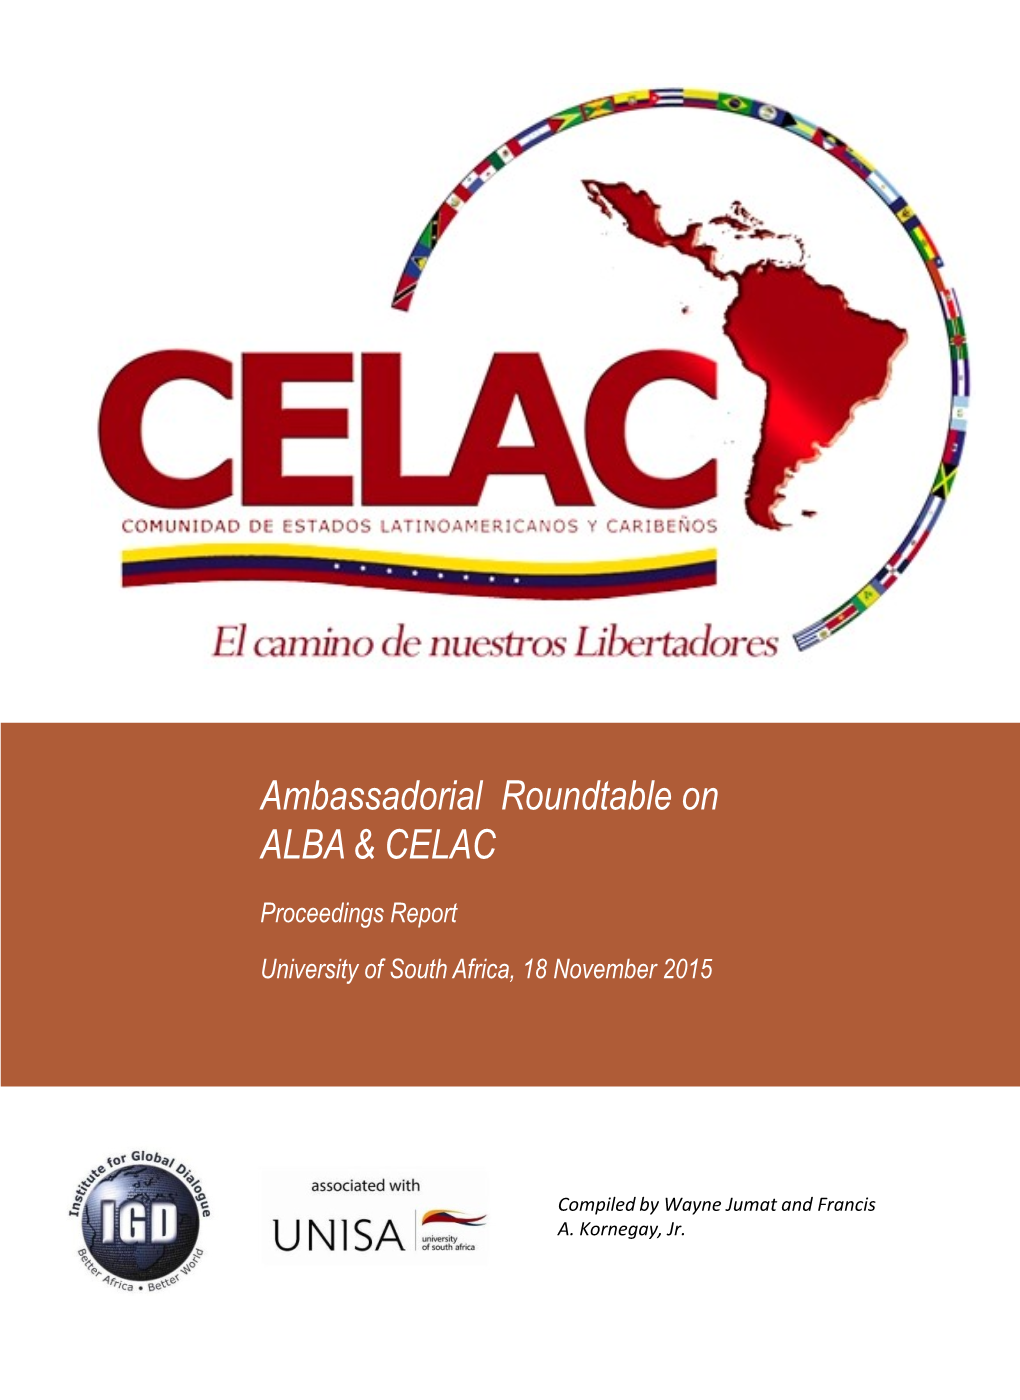 Ambassadorial Roundtable on ALBA & CELAC